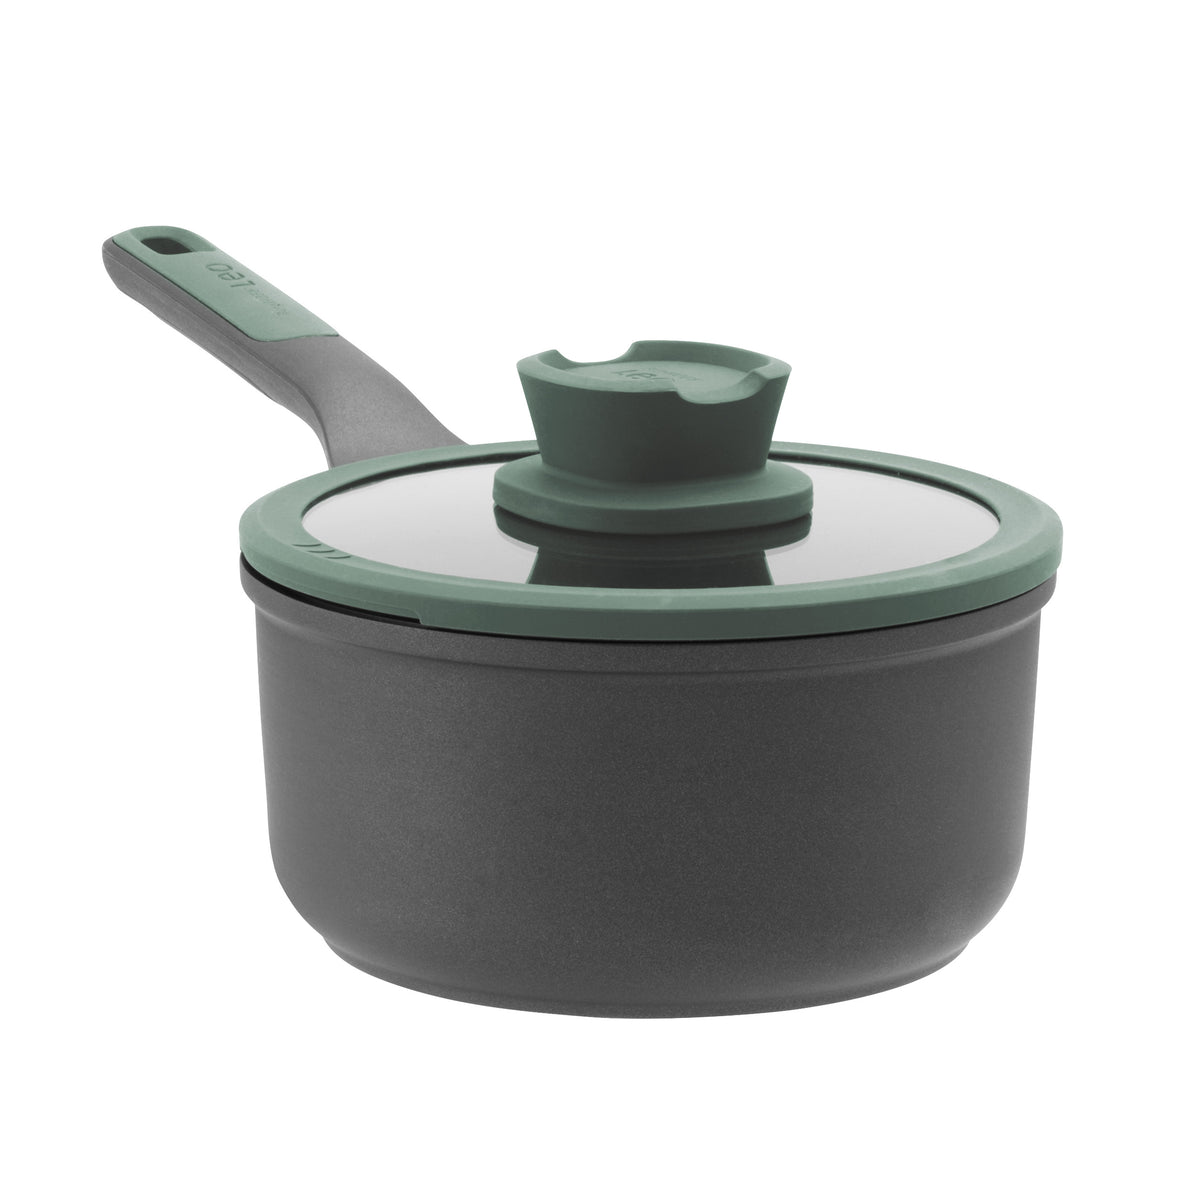 Ceramic Saucepan with Lid, Non-Toxic Nonstick Small Sauce Pot, 2.9